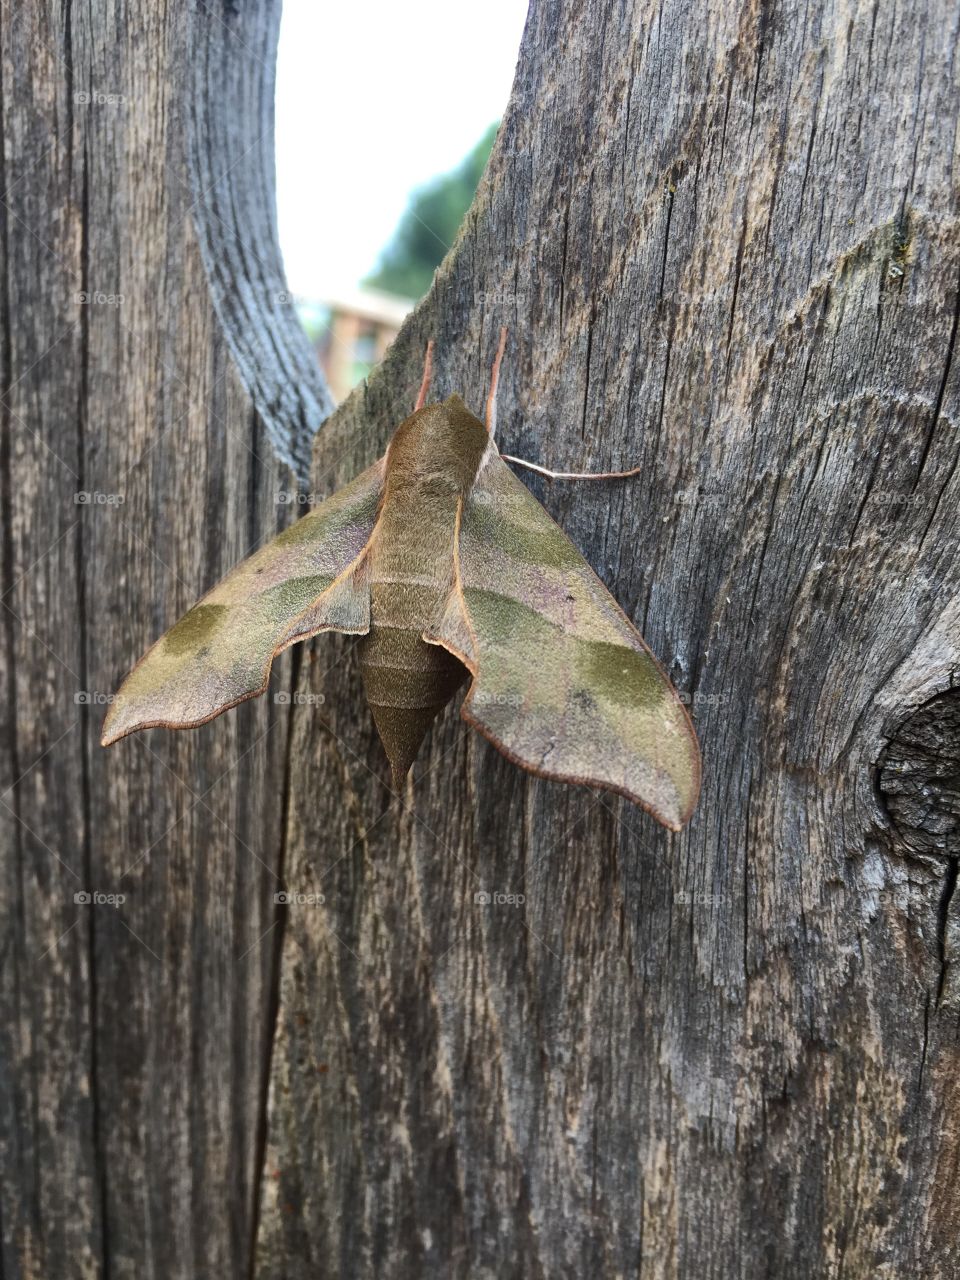 Moth on a fence